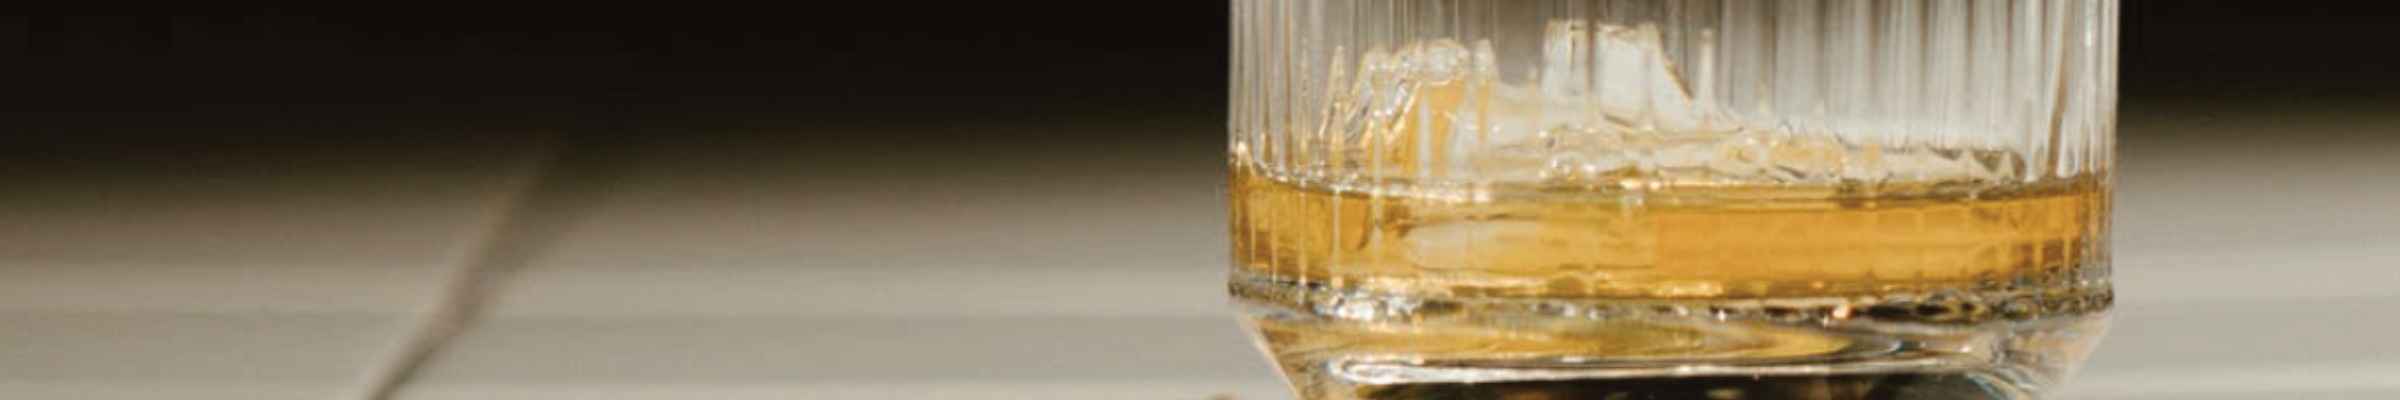 Achat Whiskey en ligne | Conroy Vins et Spiritueux